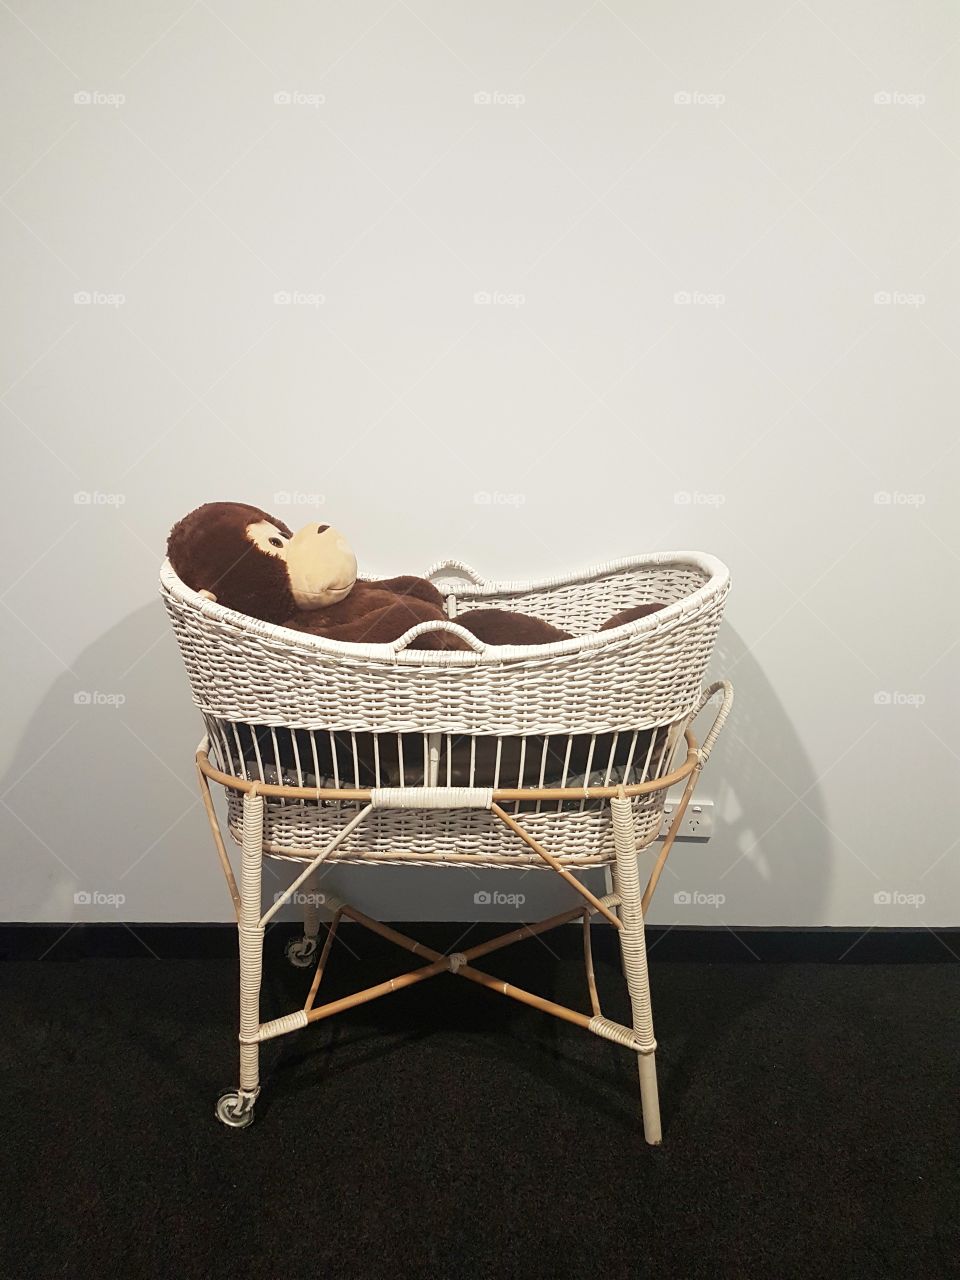 Nursery vintage bassinet with toy monkey